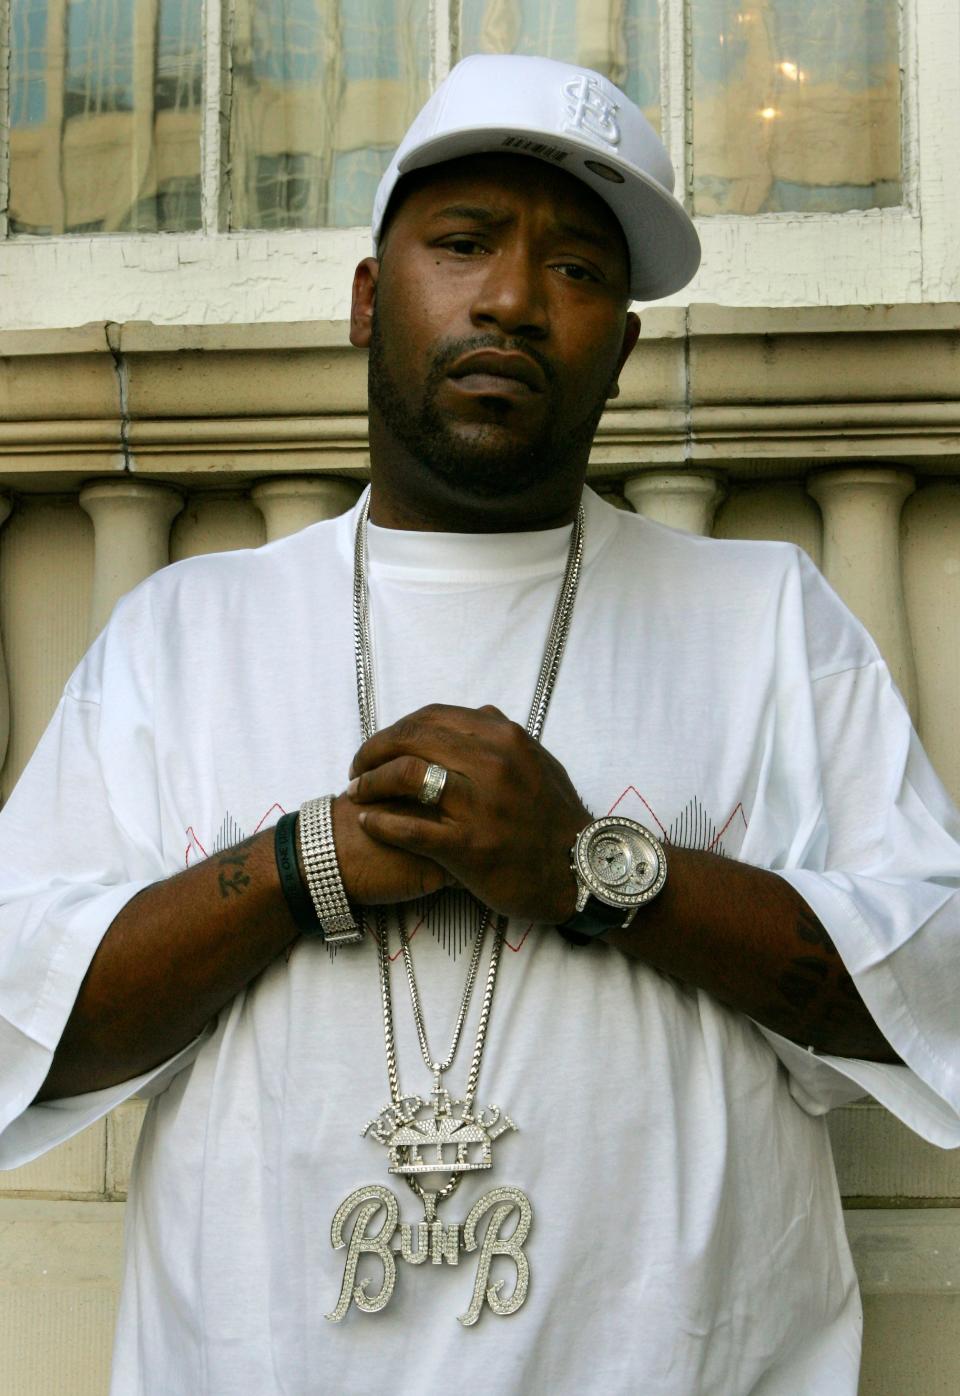 Houston-Based Rapper Bun B poses for a portrait in 2005.